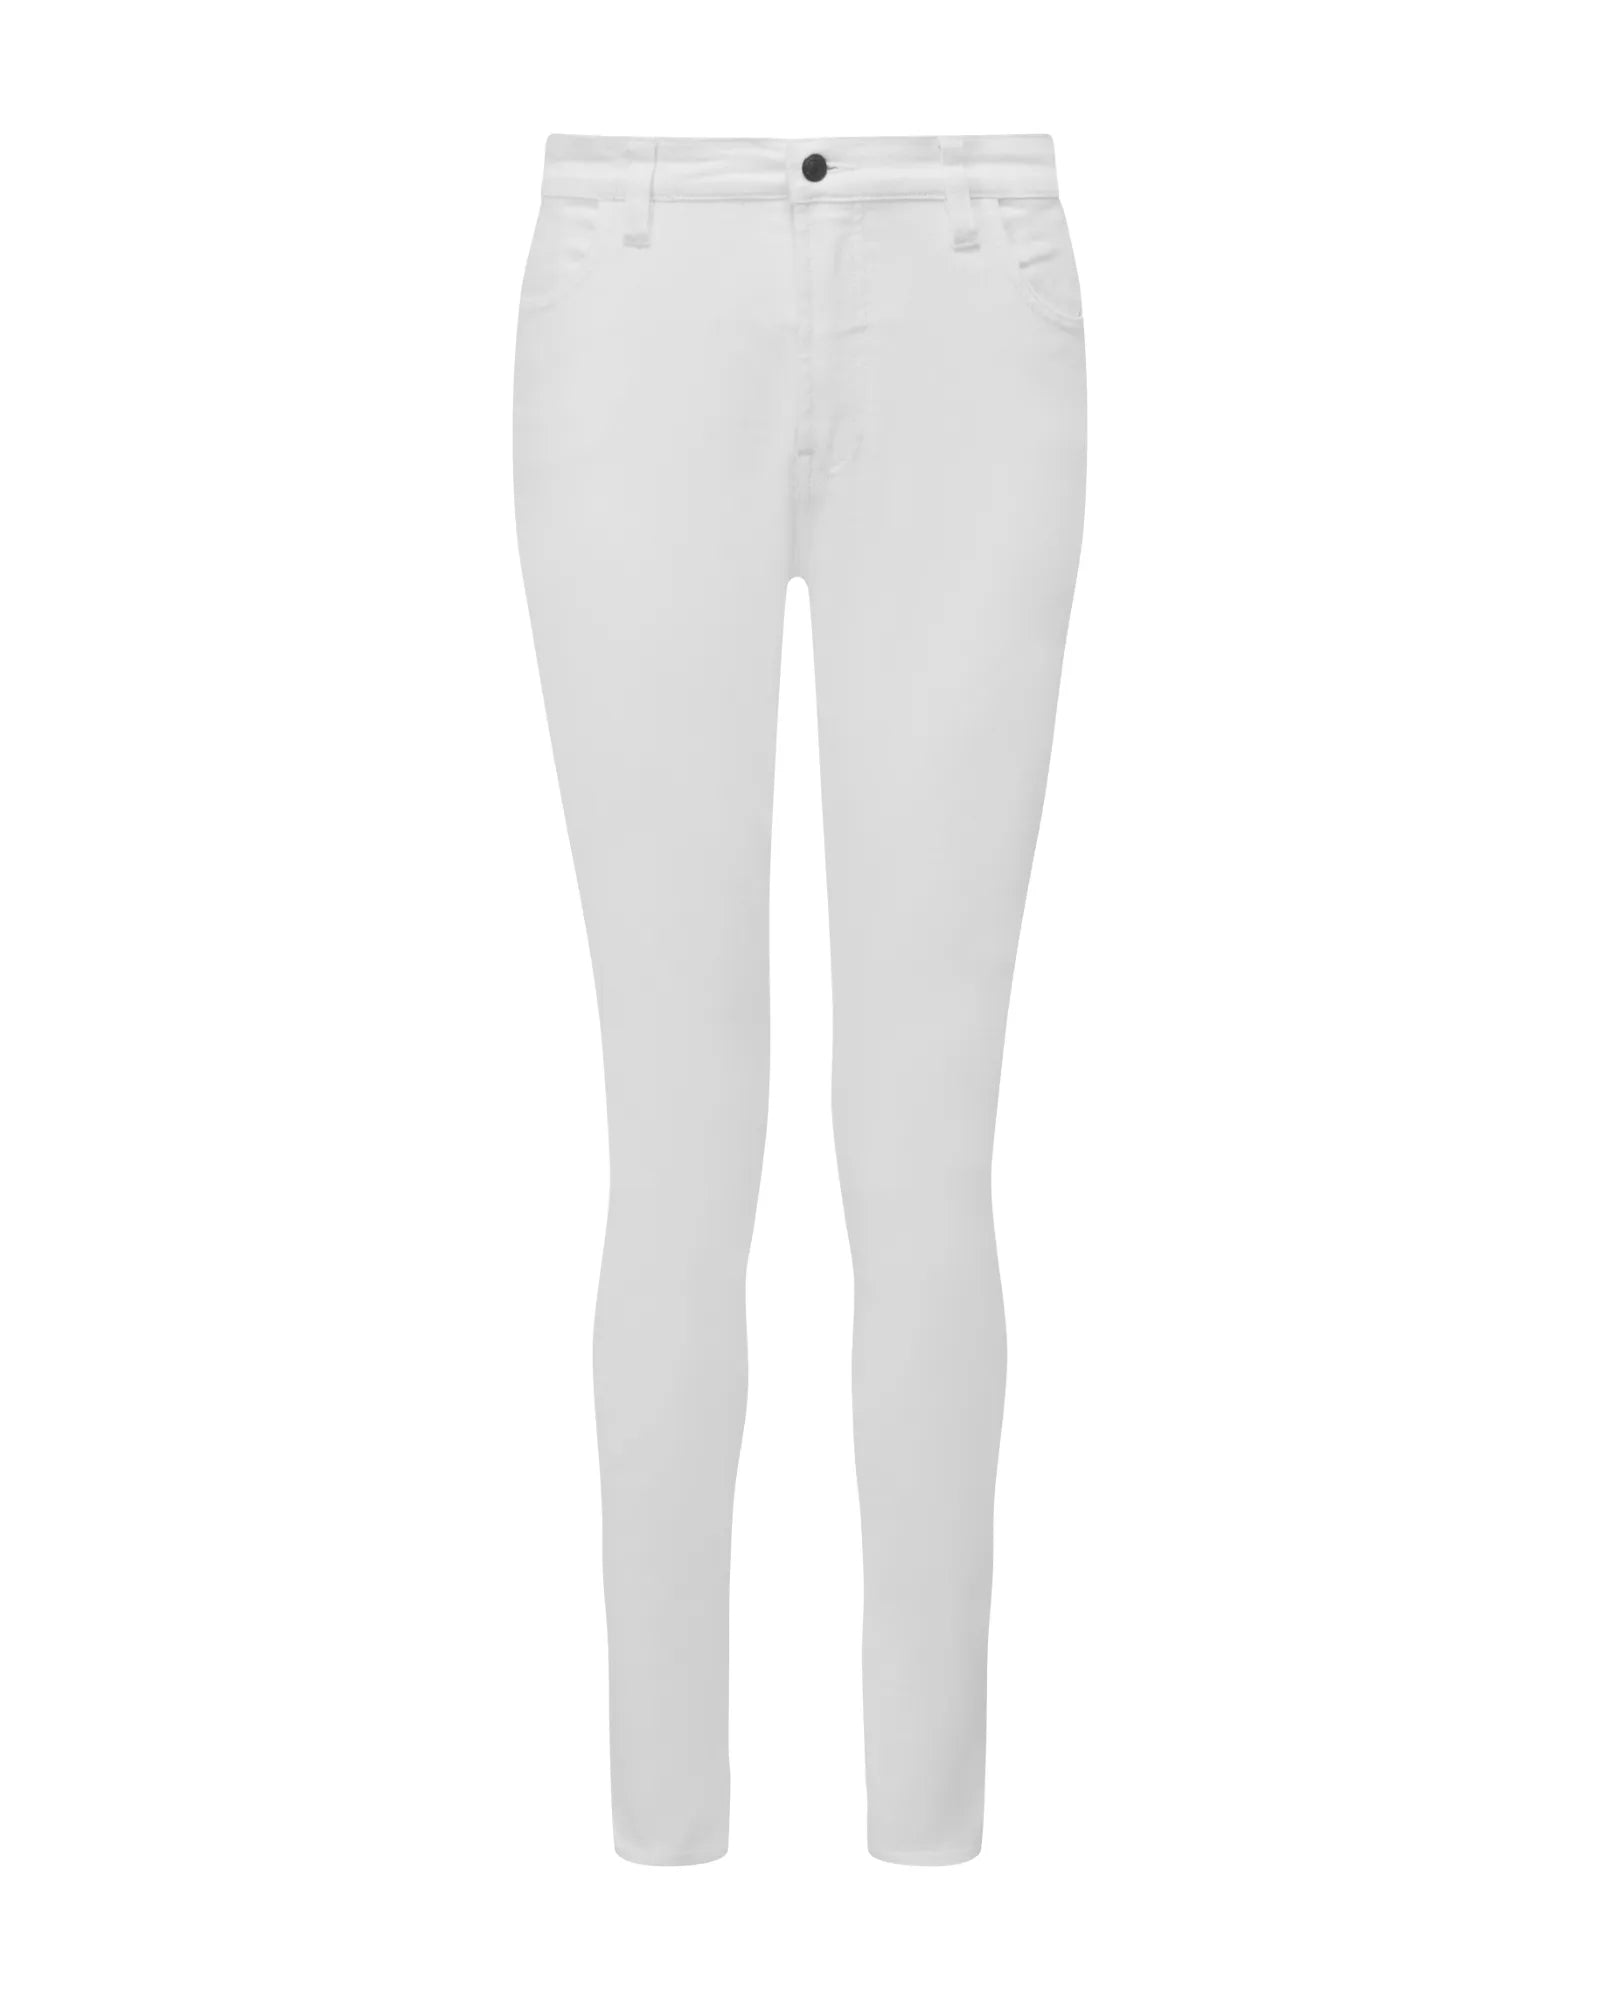 Poppy White Slim Stretch Jeans